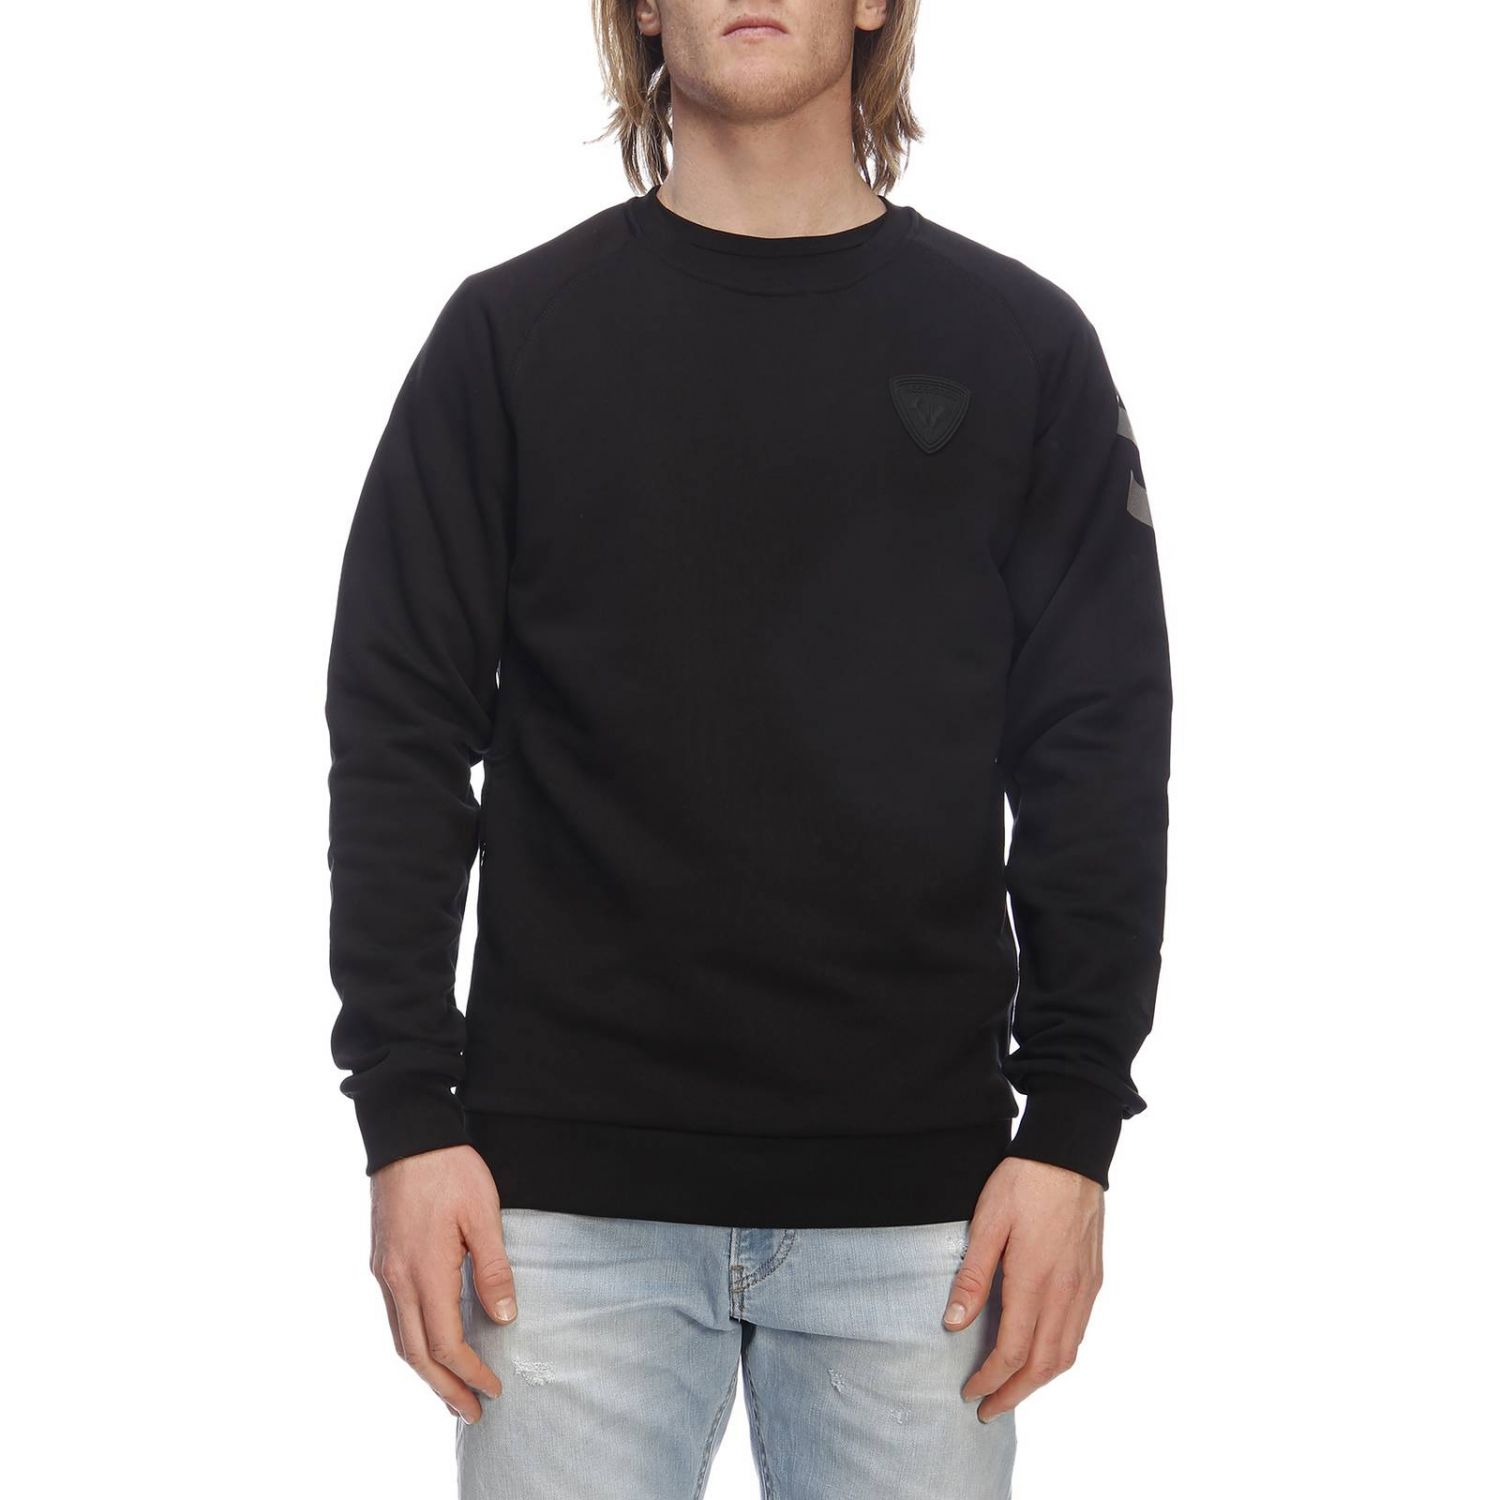 Rossignol Outlet: sweater for man - Black | Rossignol sweater RLHMS25 ...